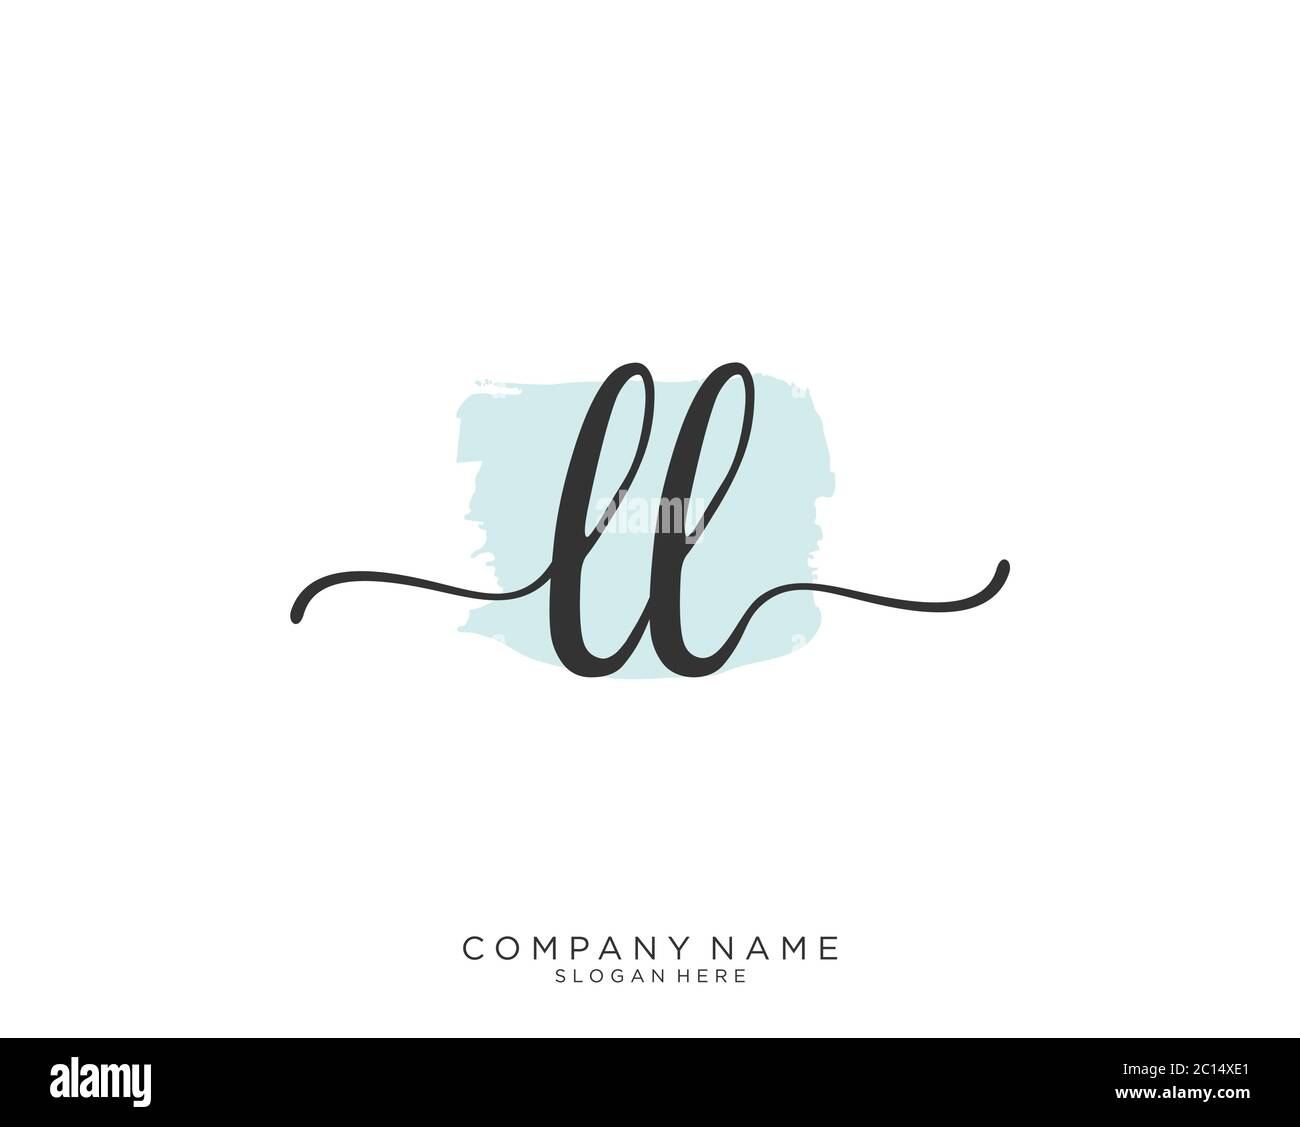 LL Initial handwriting logo vector Stock Vector